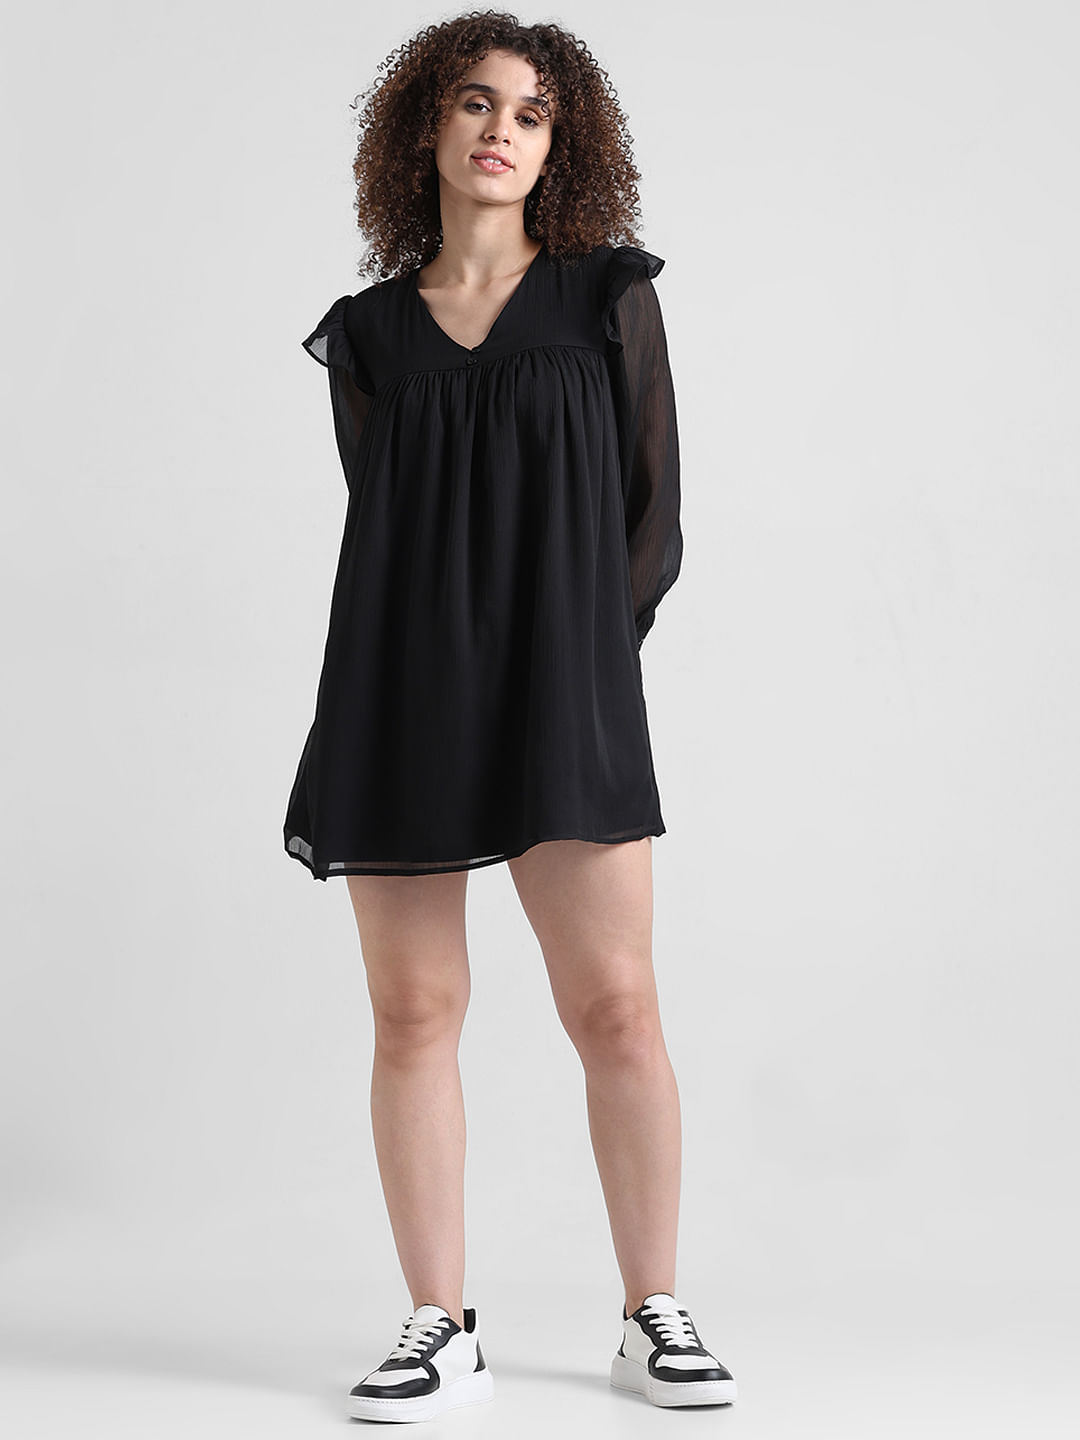 Buy Lipsy Black V Neck Long Sleeve Bodycon Dress online